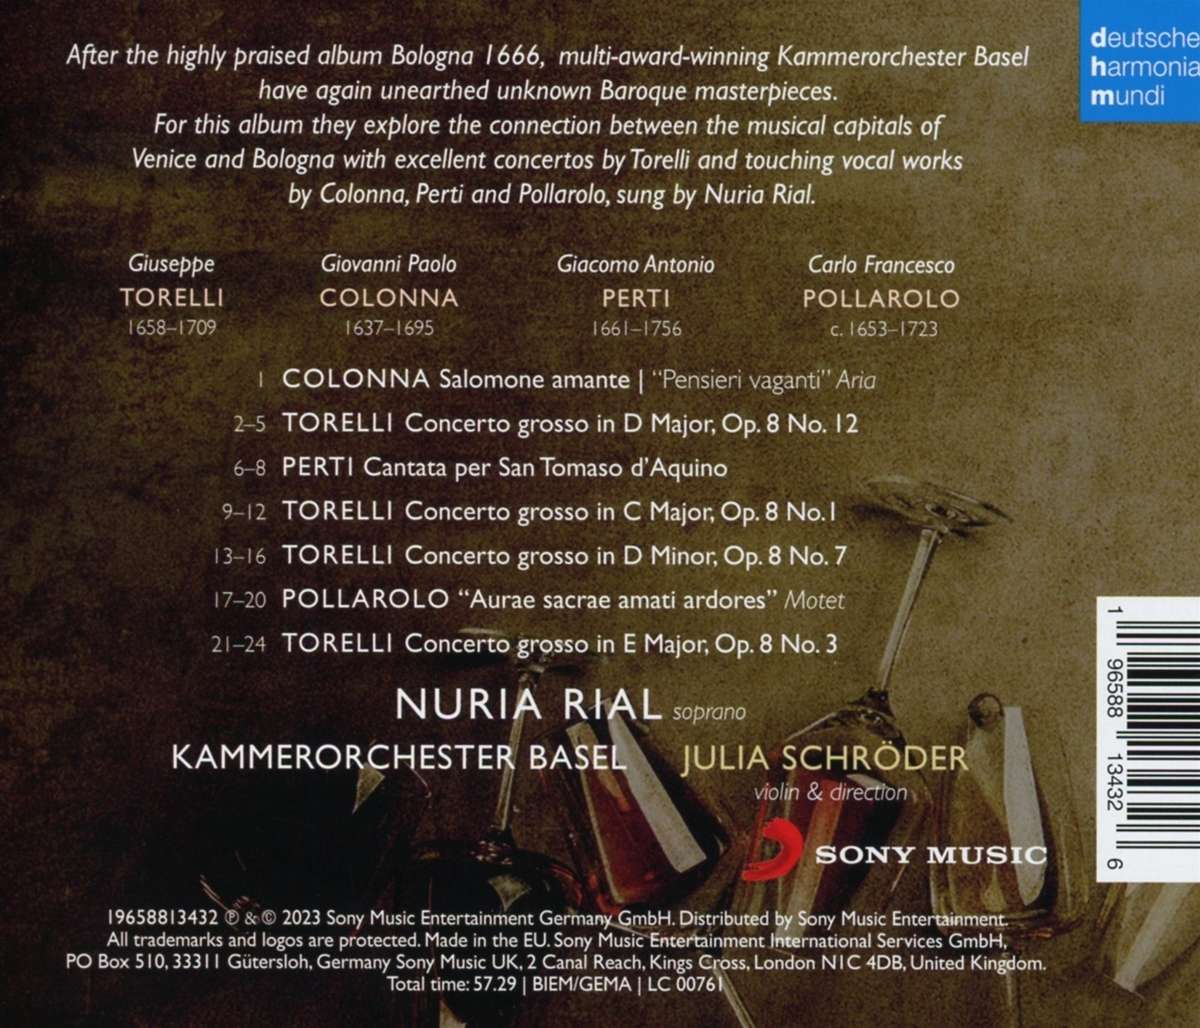 Nuria Rial 칸타타와 협주곡 - 토렐리 / 페트리 / 폴라롤로 / 콜론나 (Torelli / Perti / Pollarolo / Colonna: Concertos and Cantatas)